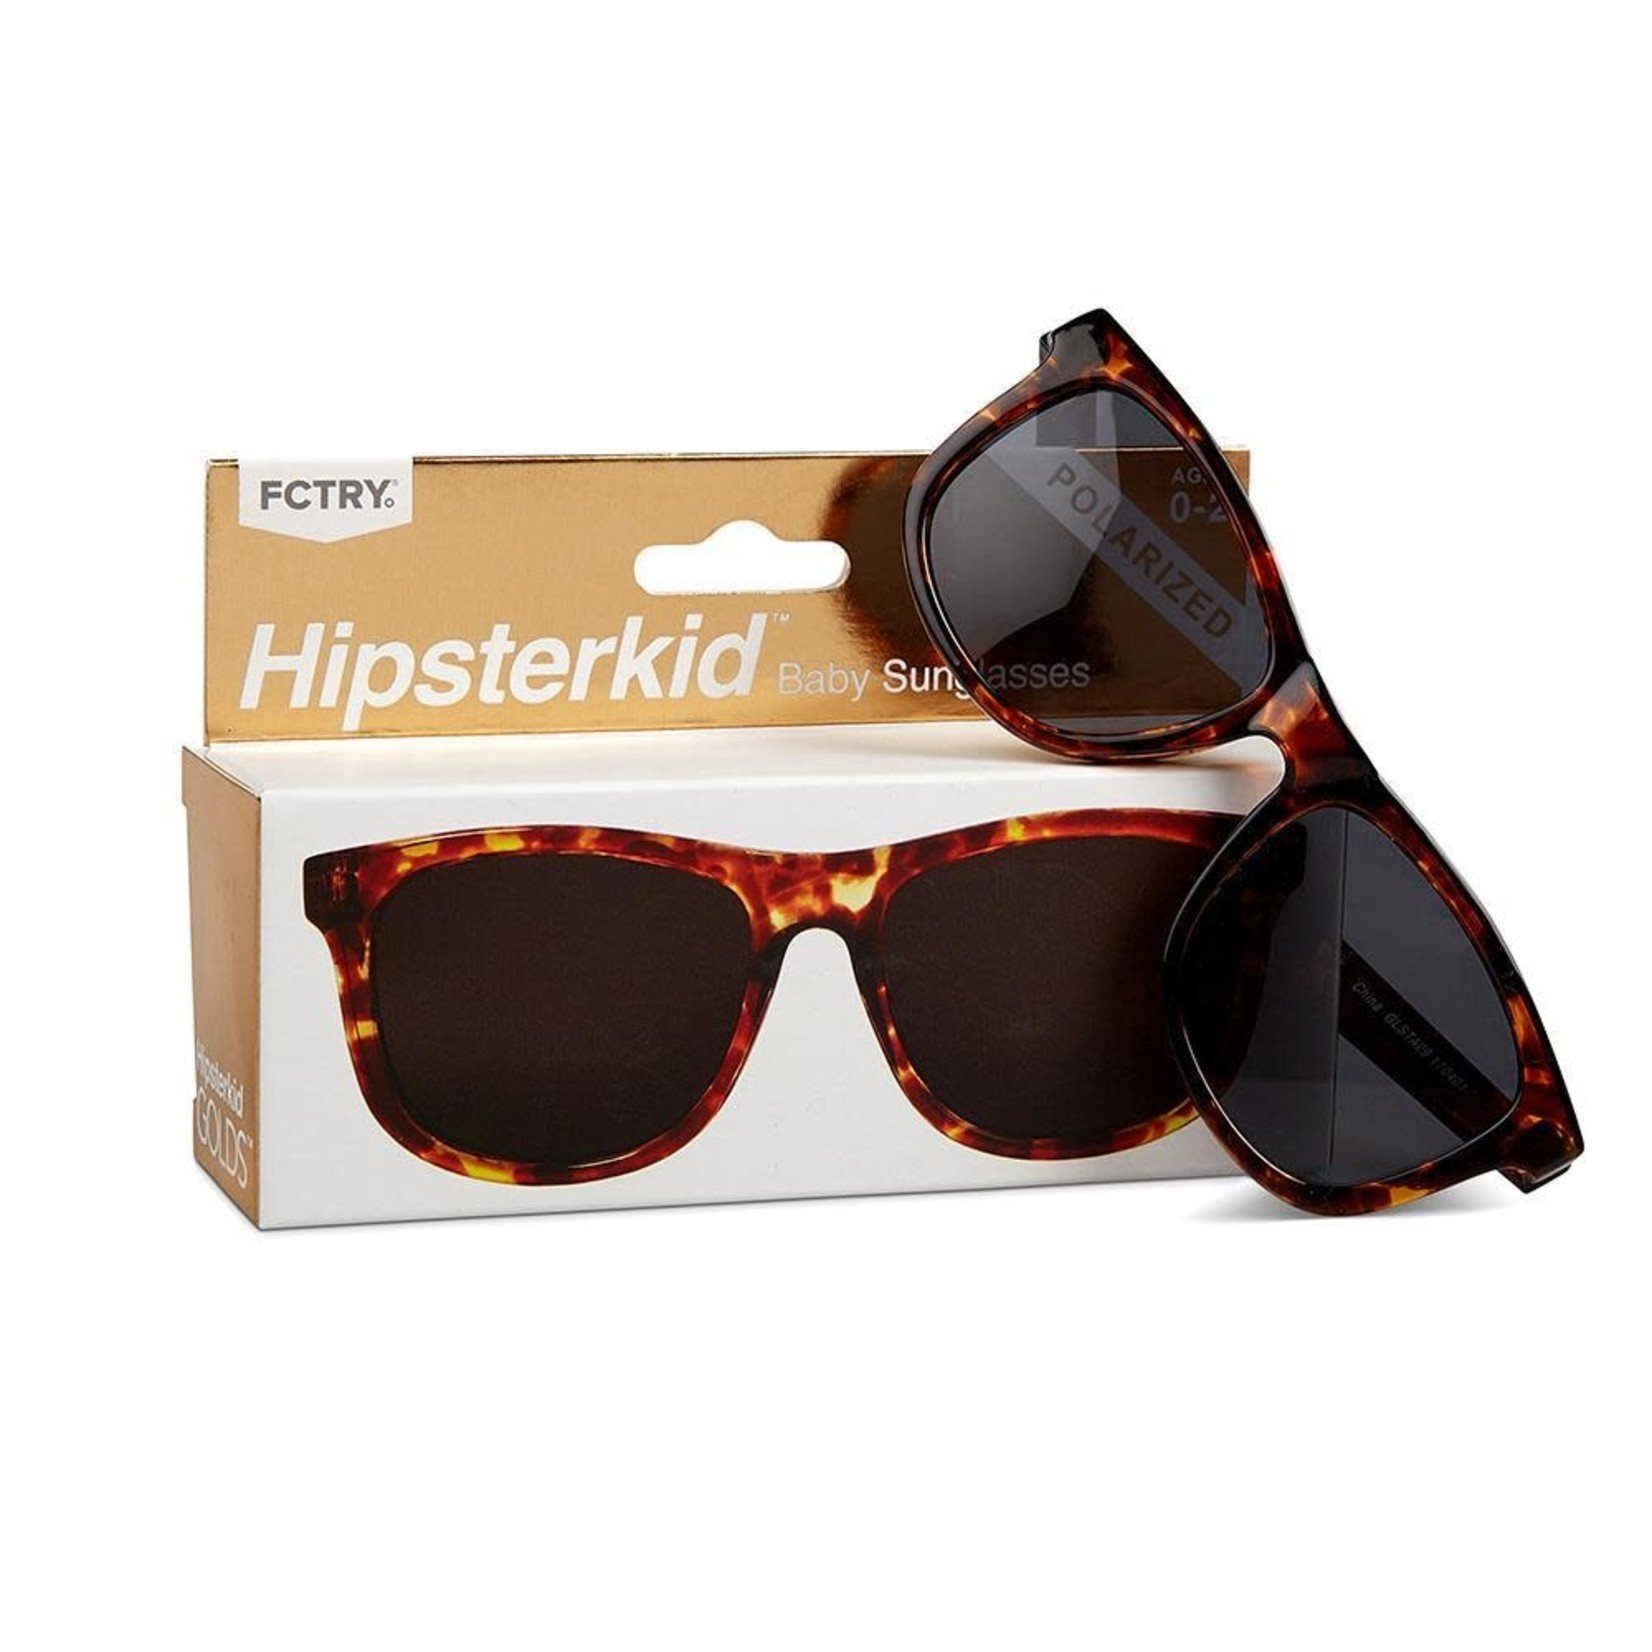 FCTRY Hipsterkid Golds Wayfarer Baby Sunglasses, Tortoise (0-2y)